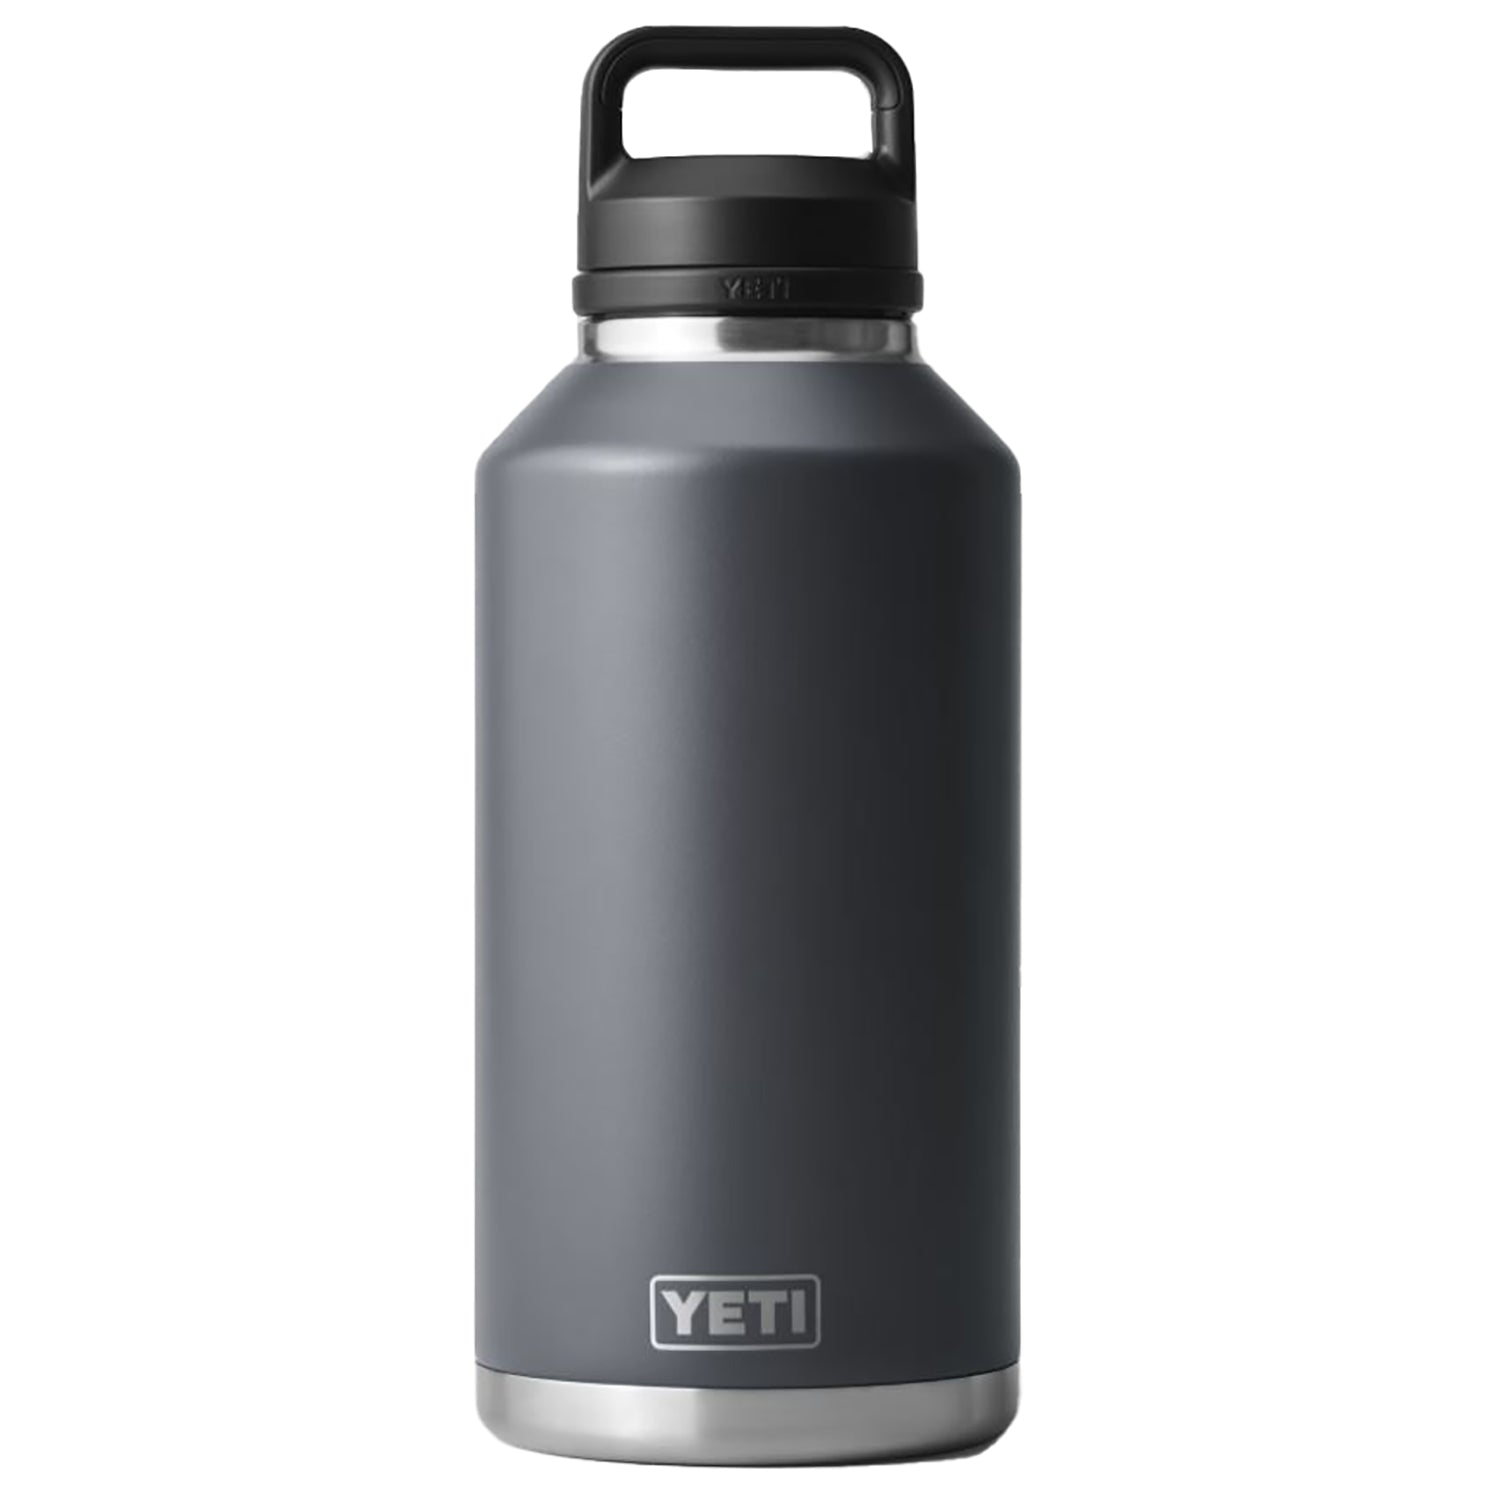 YETI- Rambler Bottle Sling Large / Charcoal